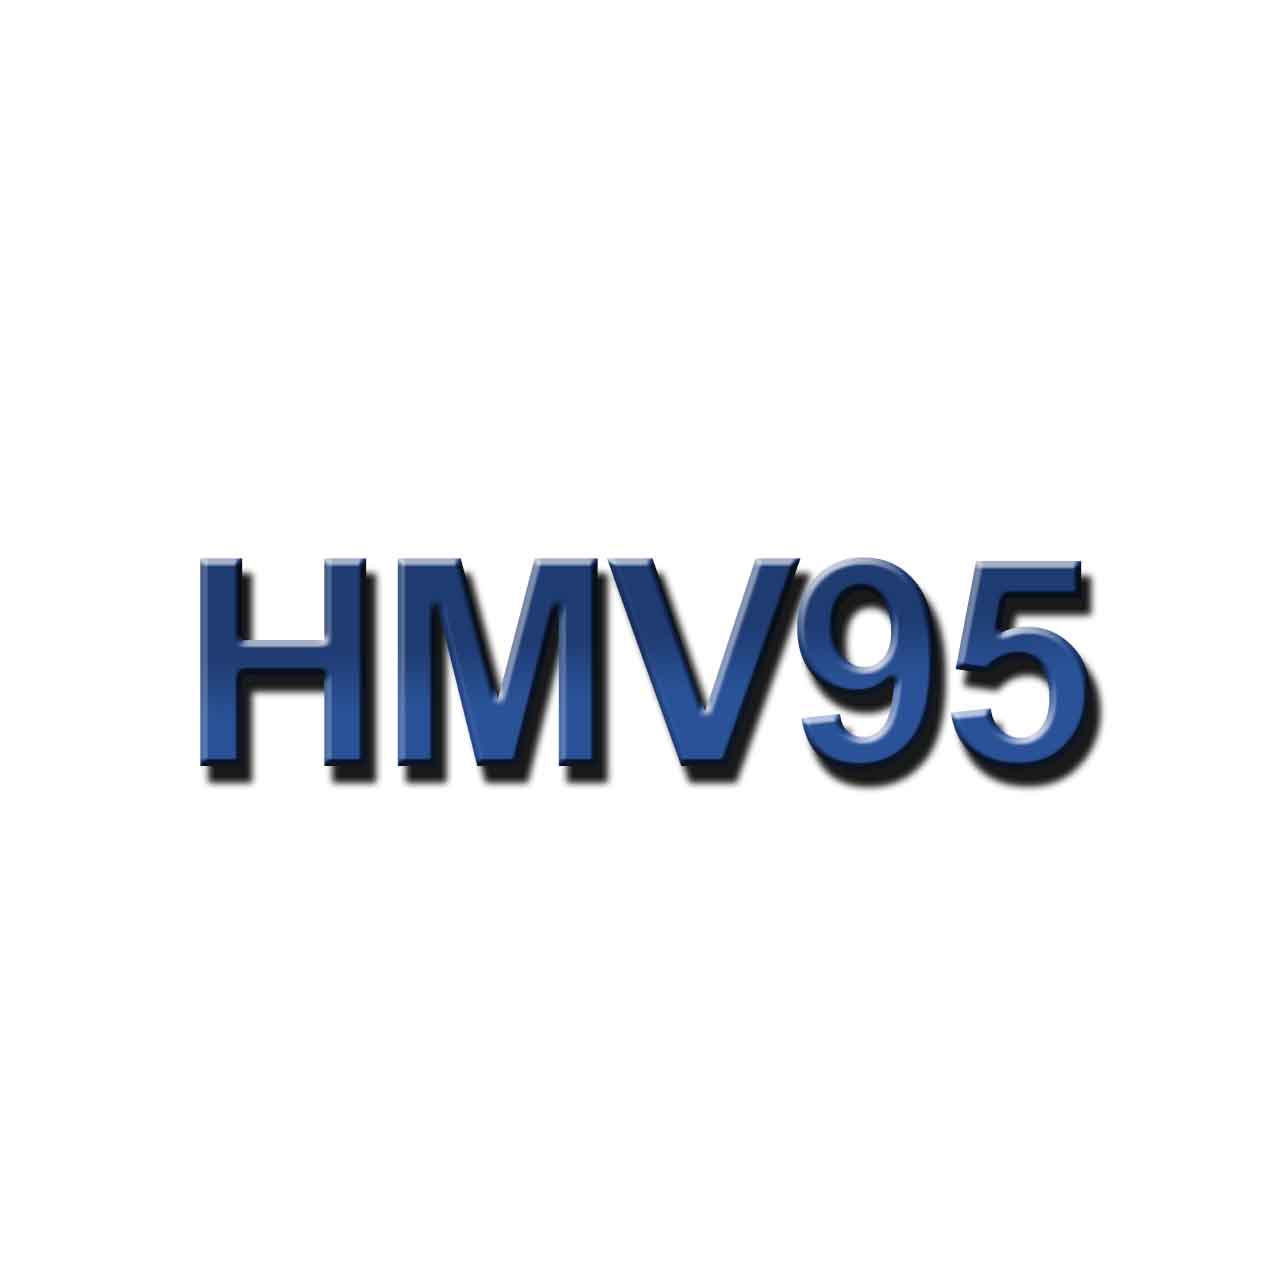 HMV95